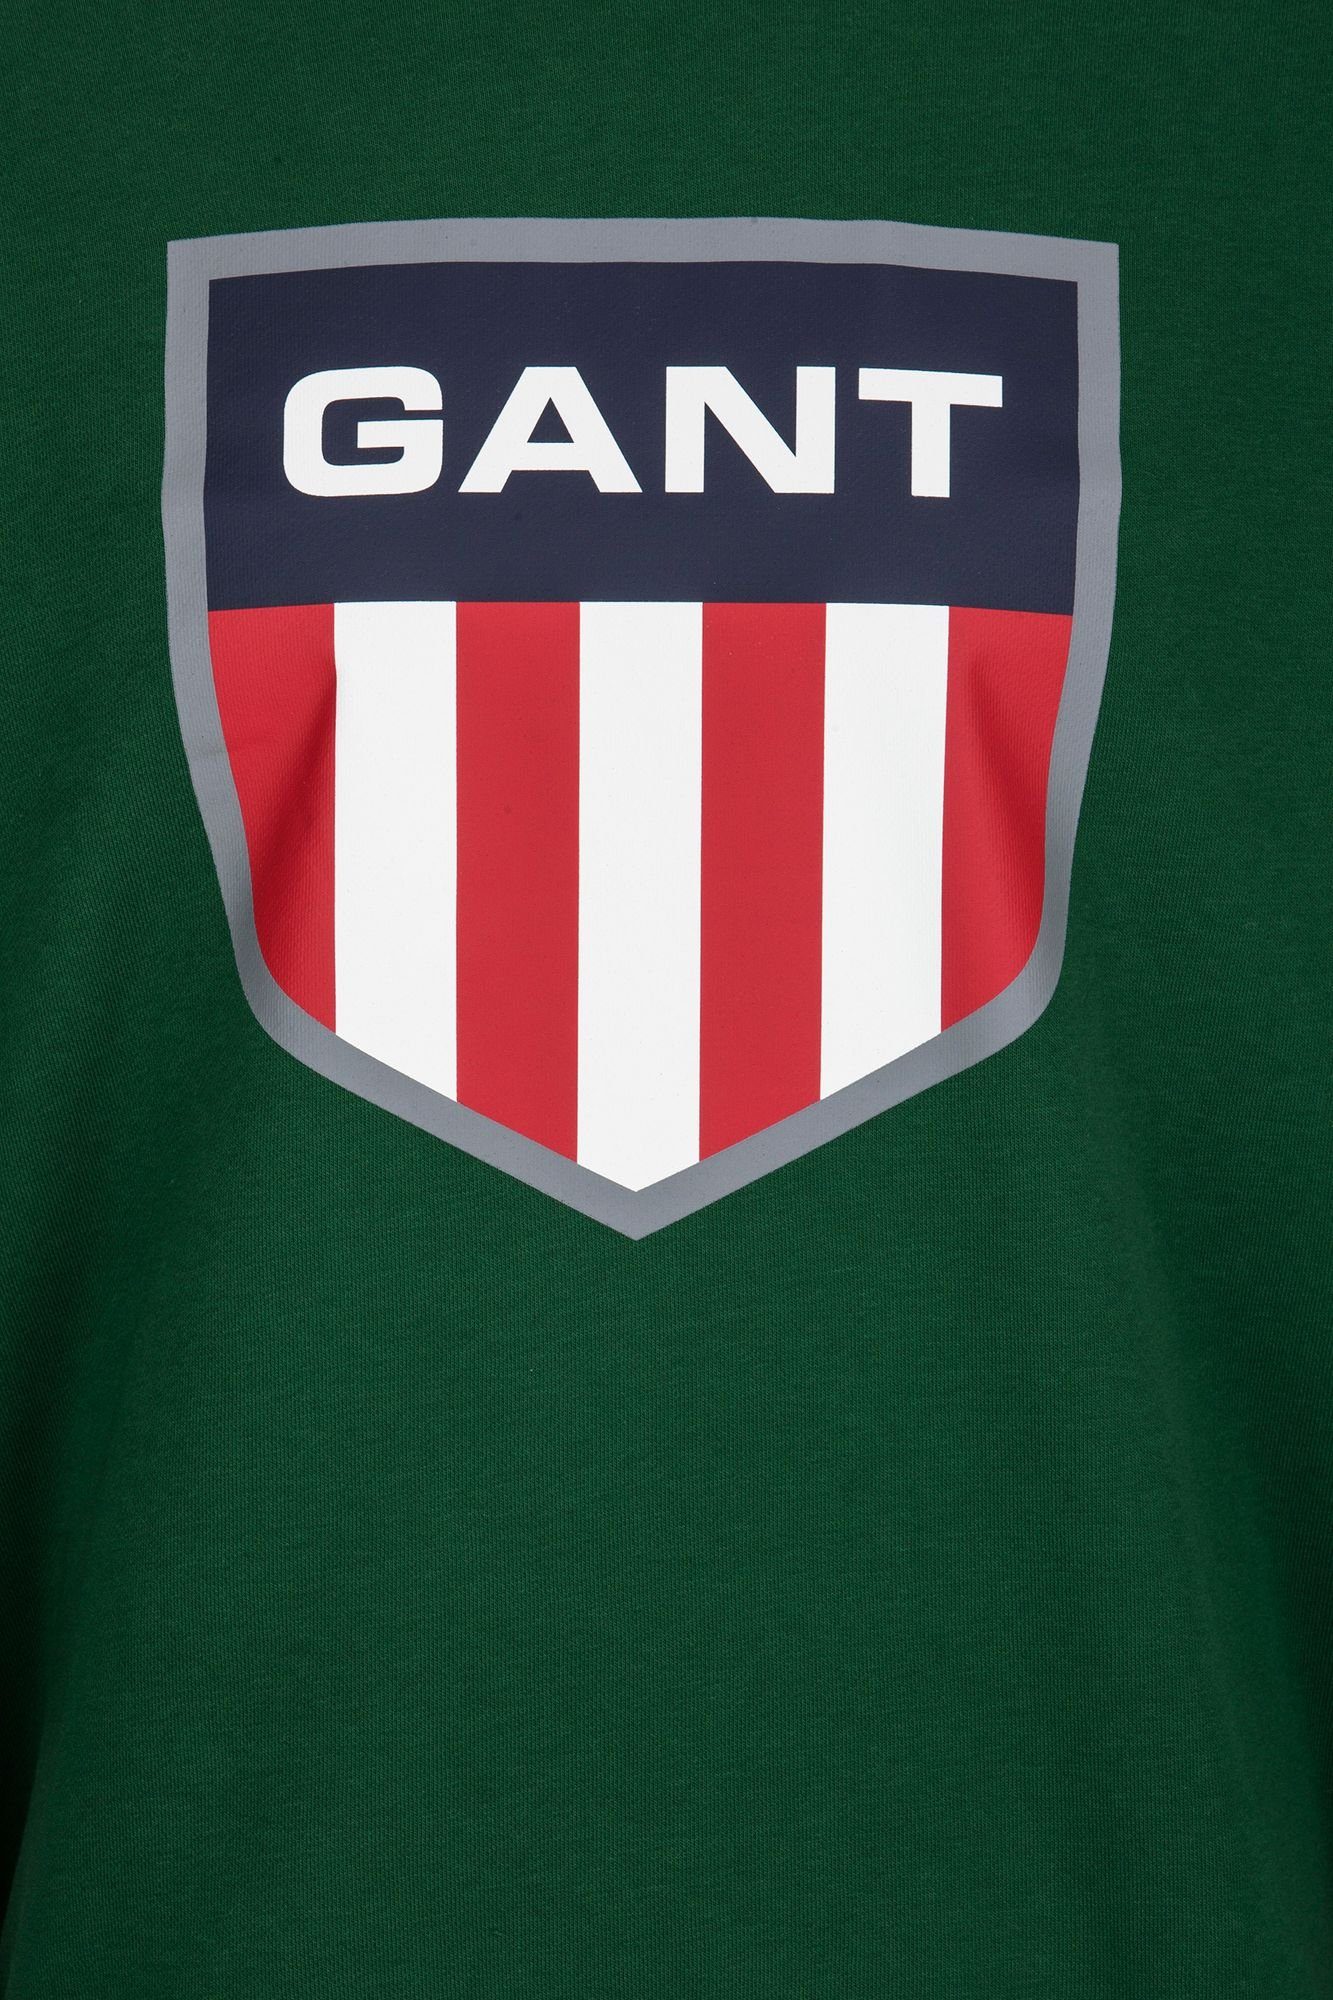 Herren Pullover Gant Sweatshirt D1. Gant Retro Shield C-Neck Sweat